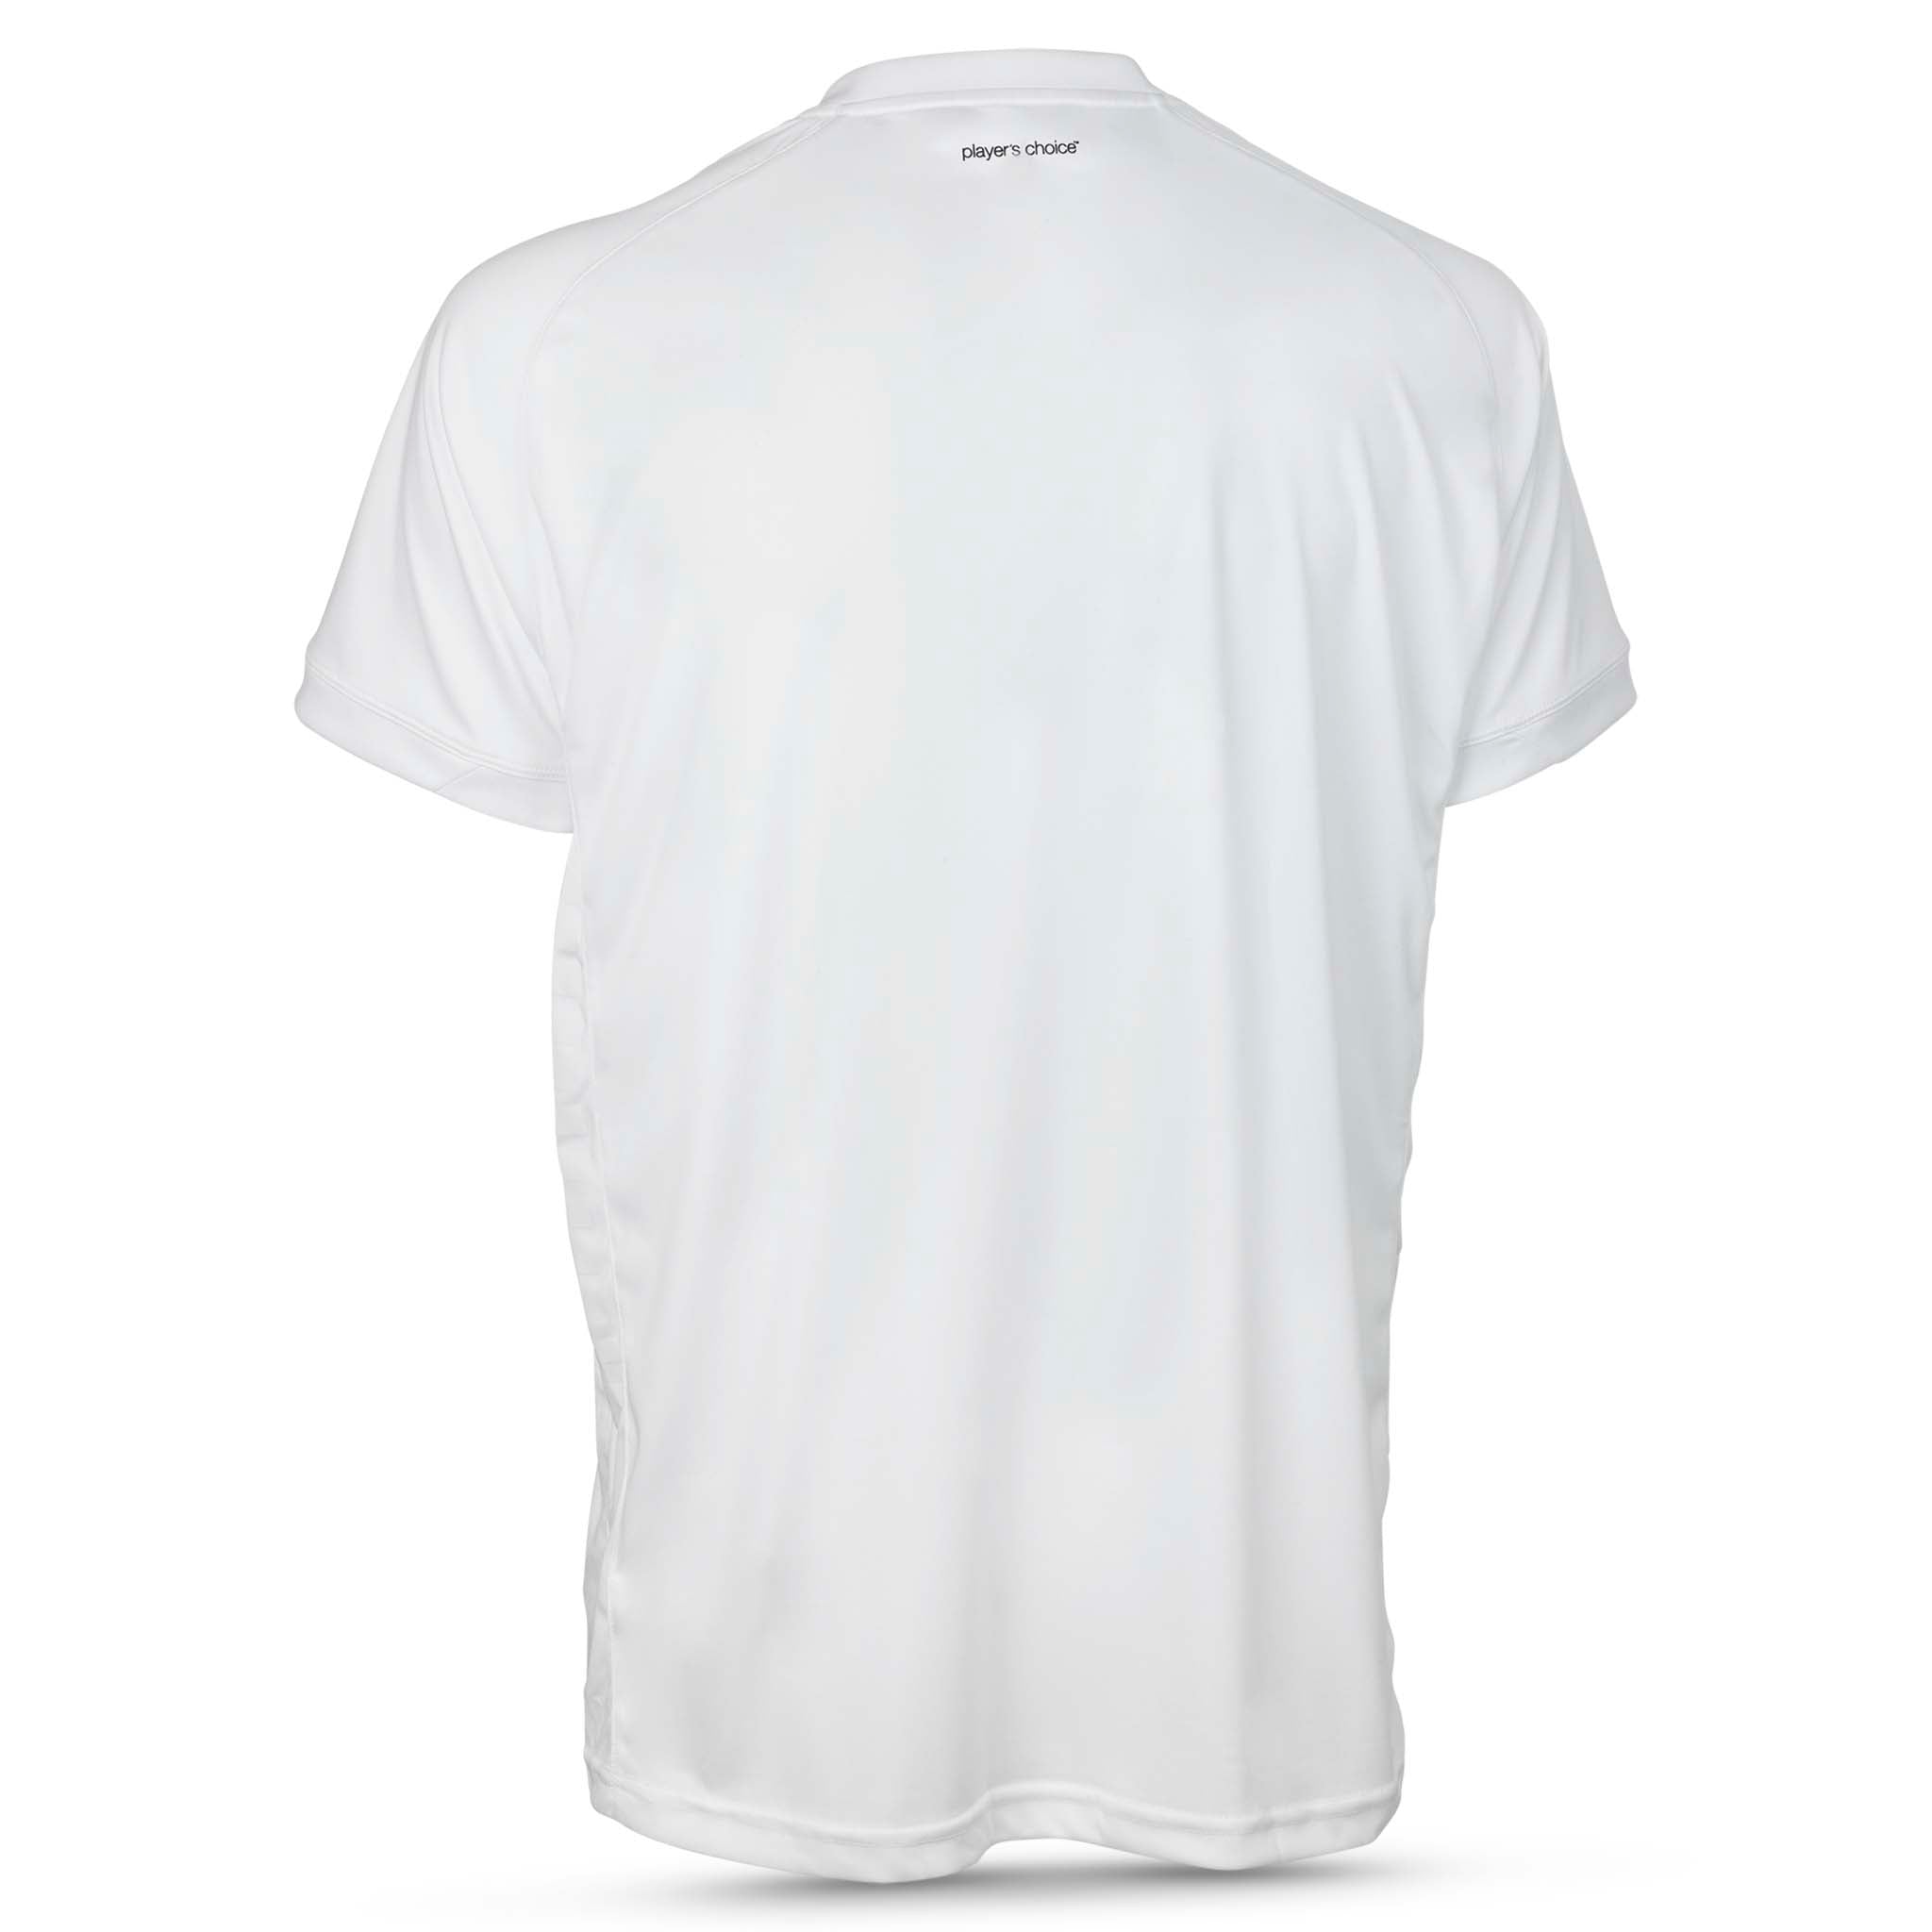 Spain Short Sleeve player shirt #colour_white #colour_white